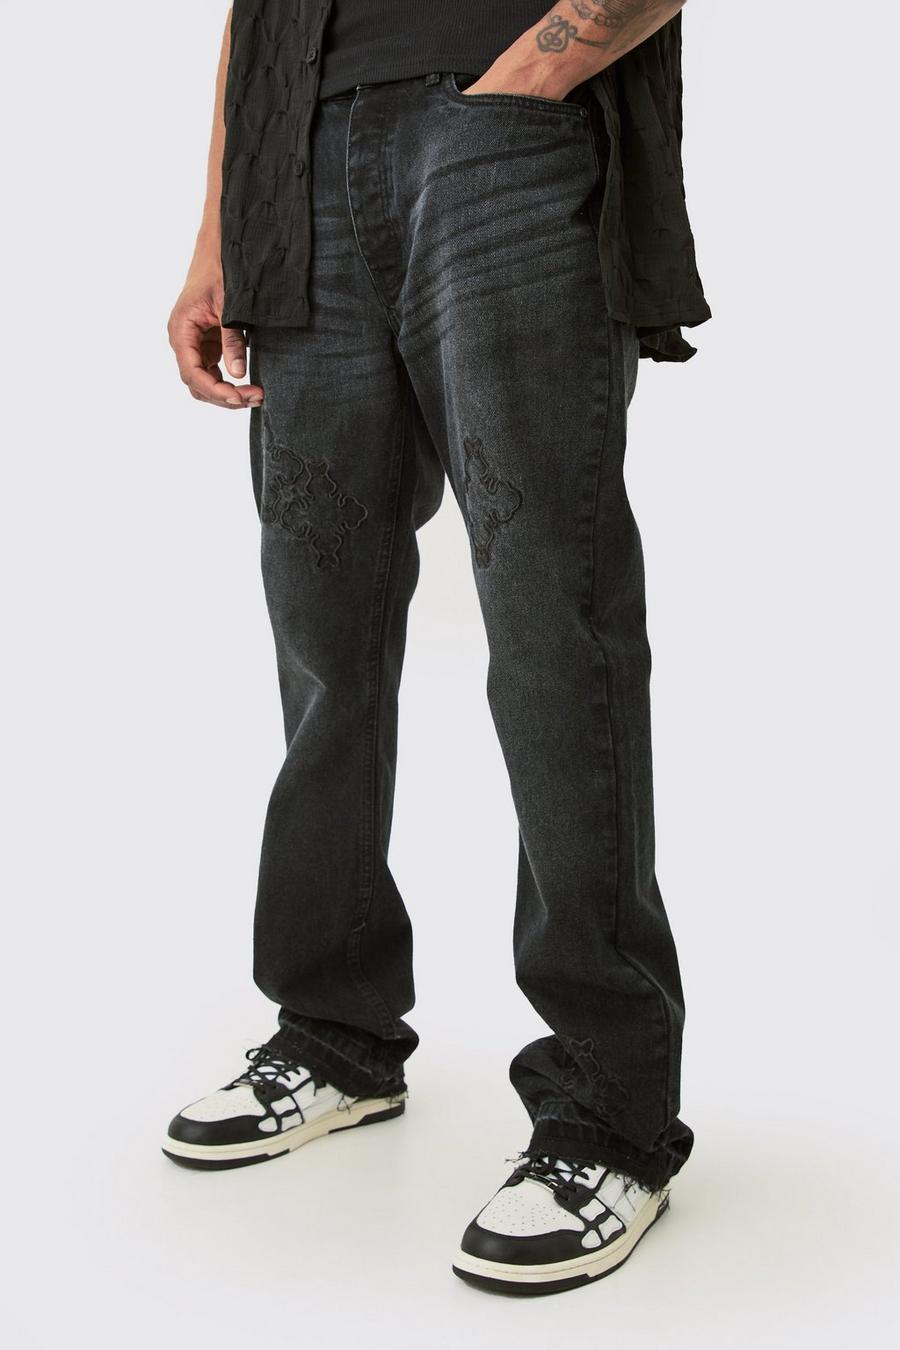 Jeans Tall Slim Fit in denim rigido con applique a croce, Washed black